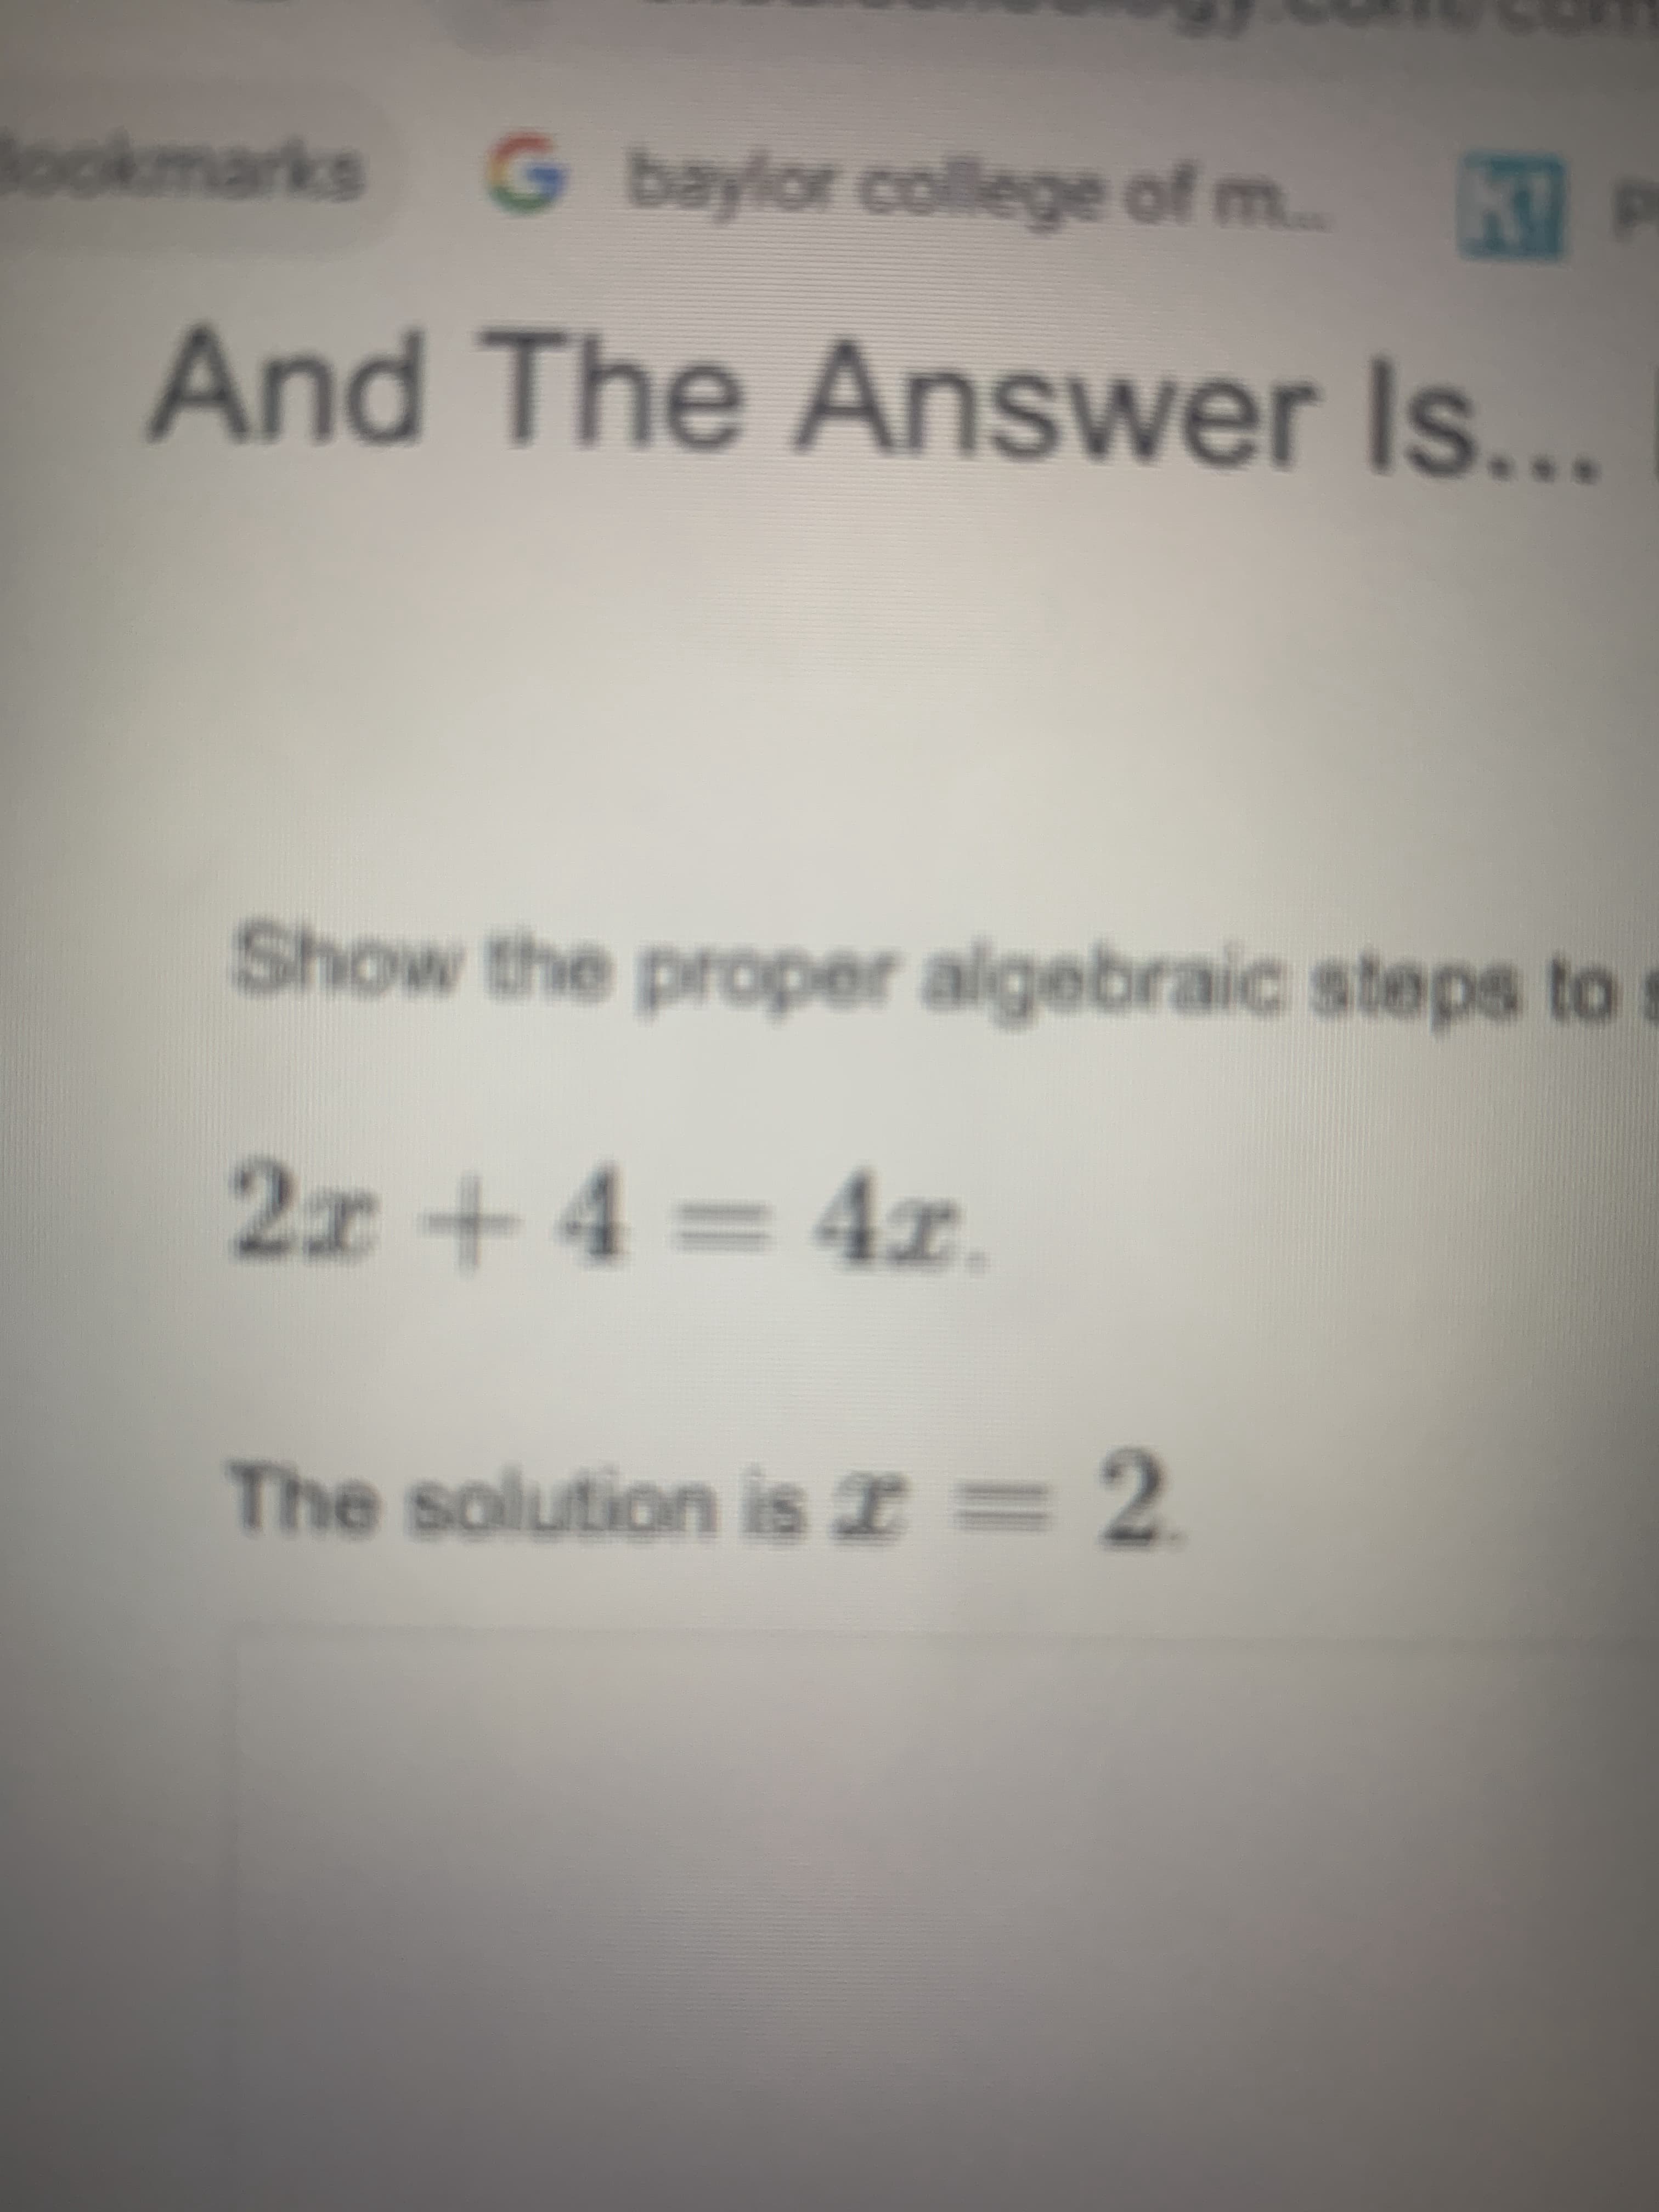 Show the proper algebraic steps to
2x+4 = 4x.
%3D
